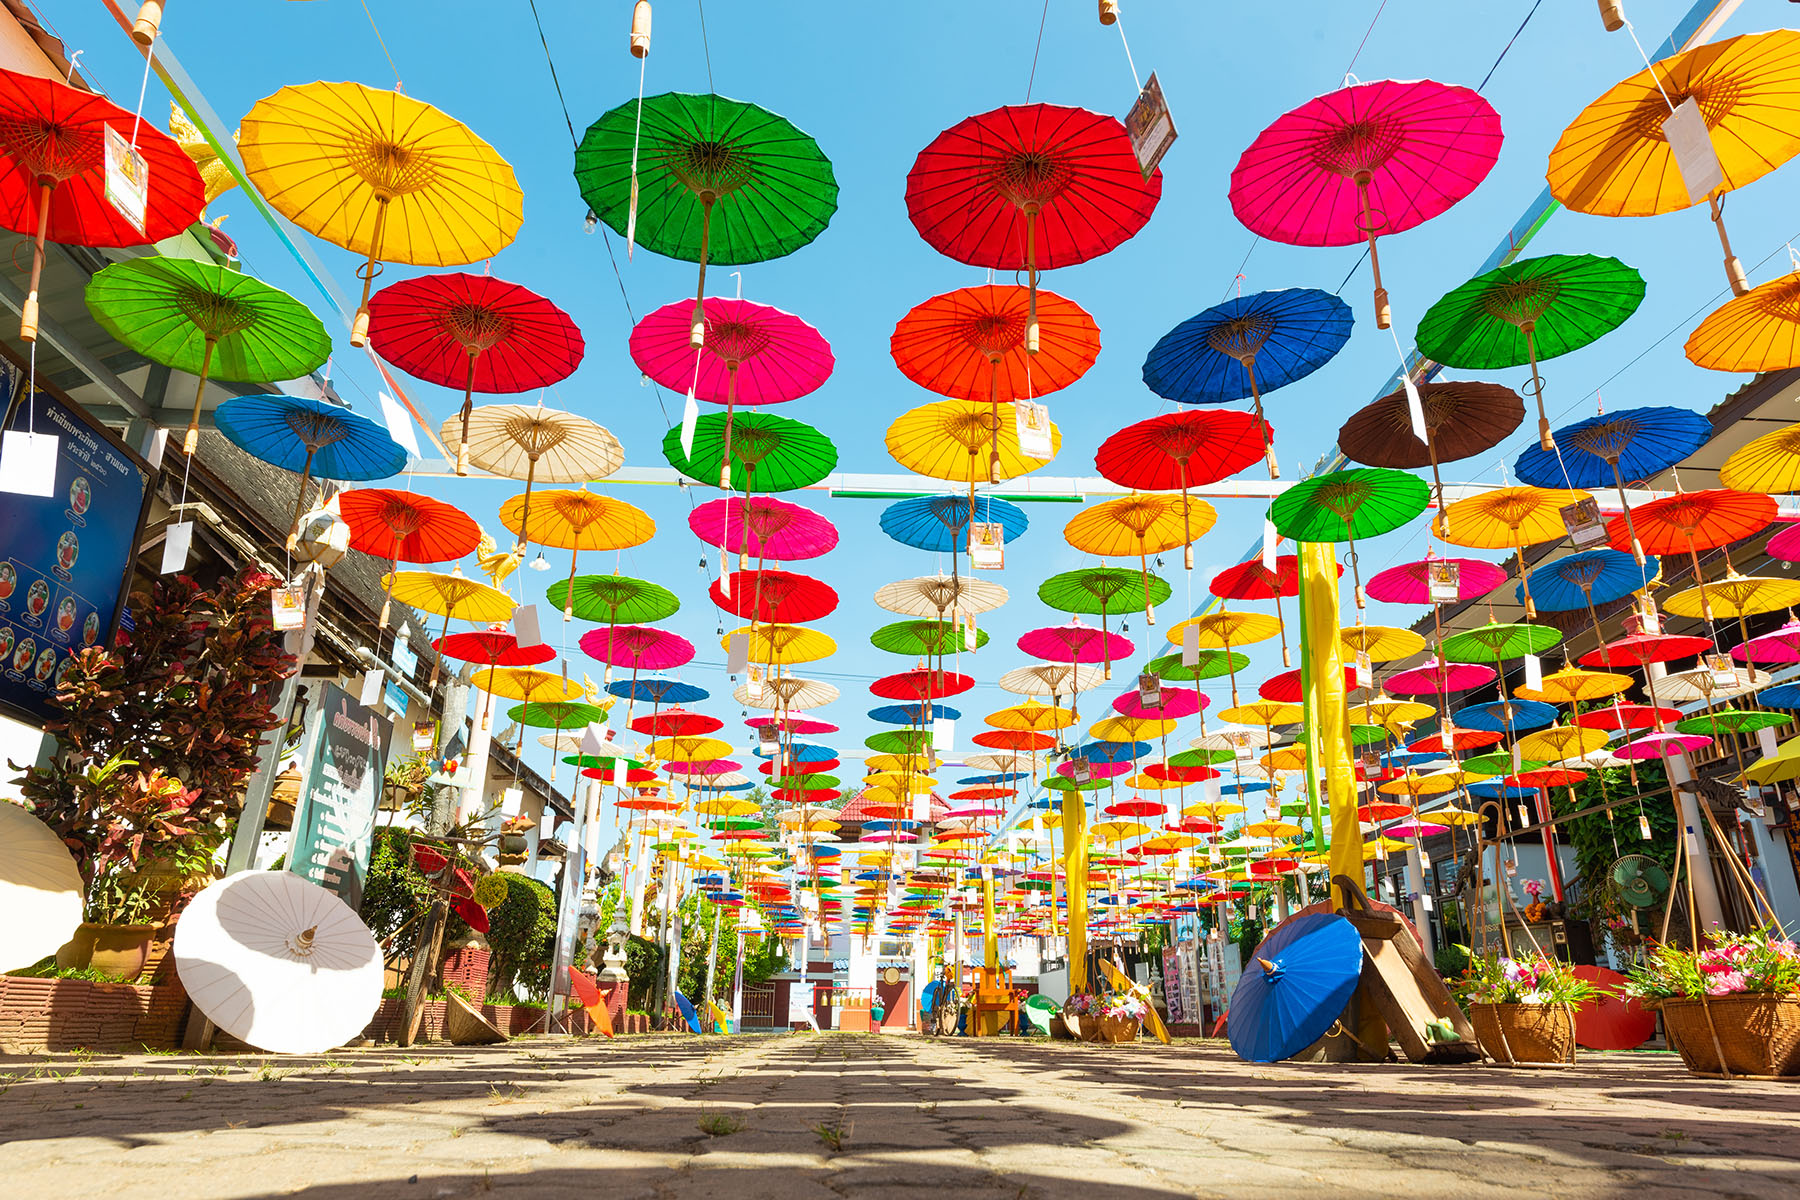 Colorful paper handmade umbrellas hanging upside down across the street at Wat Tha Luk, Chiangmai, Thailand